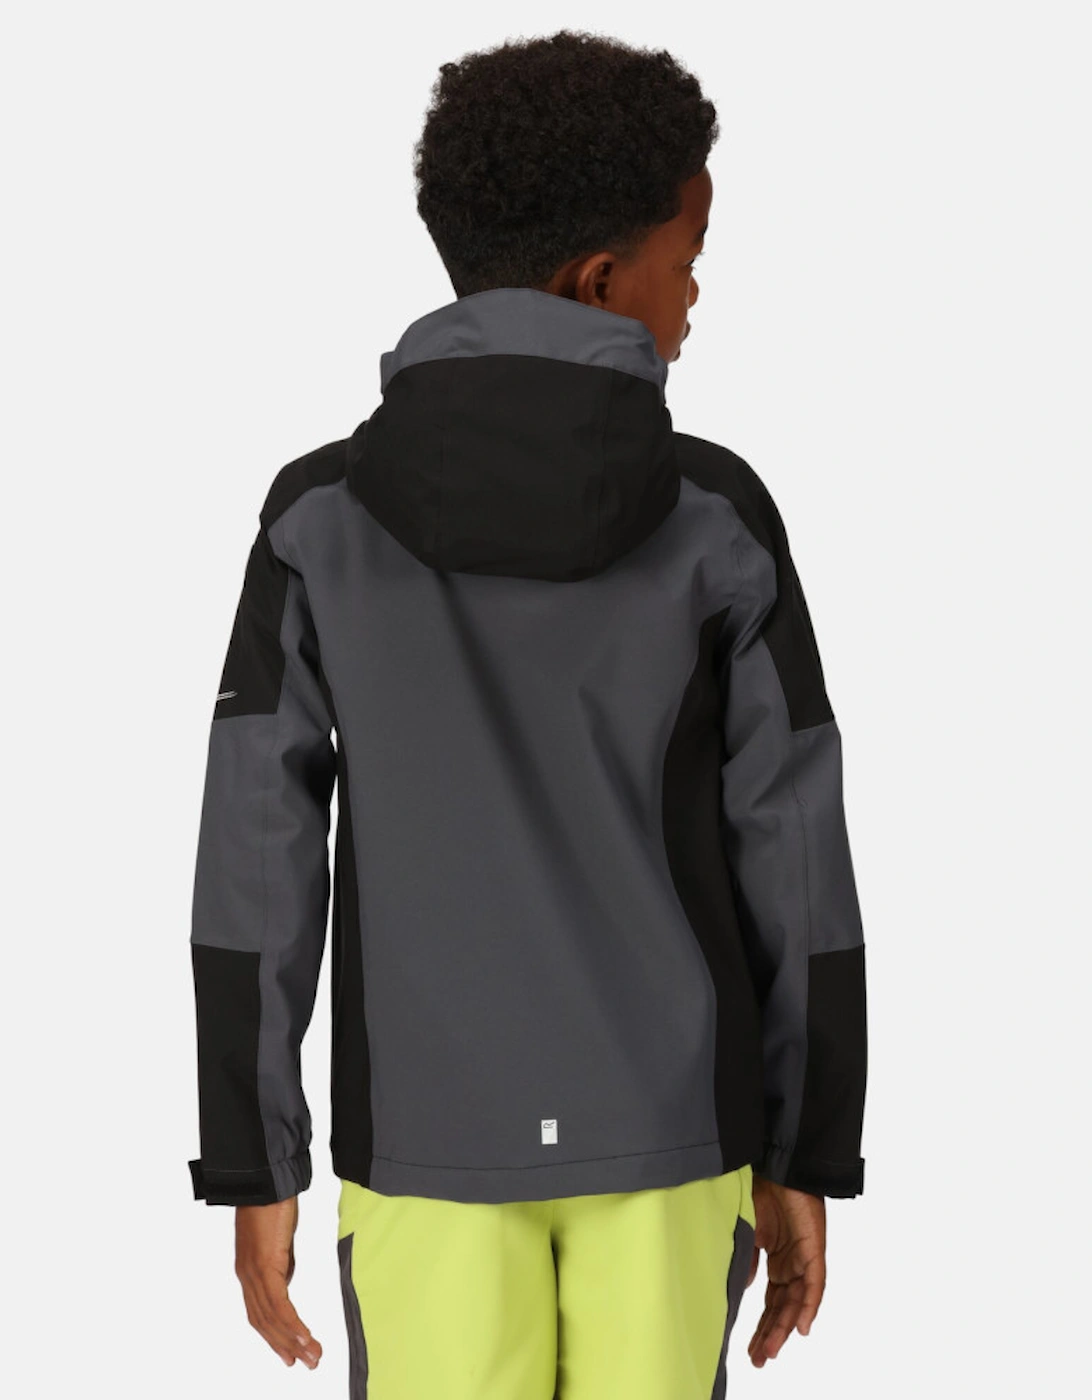 Boys Highton IV Waterproof Breathable Jacket Coat